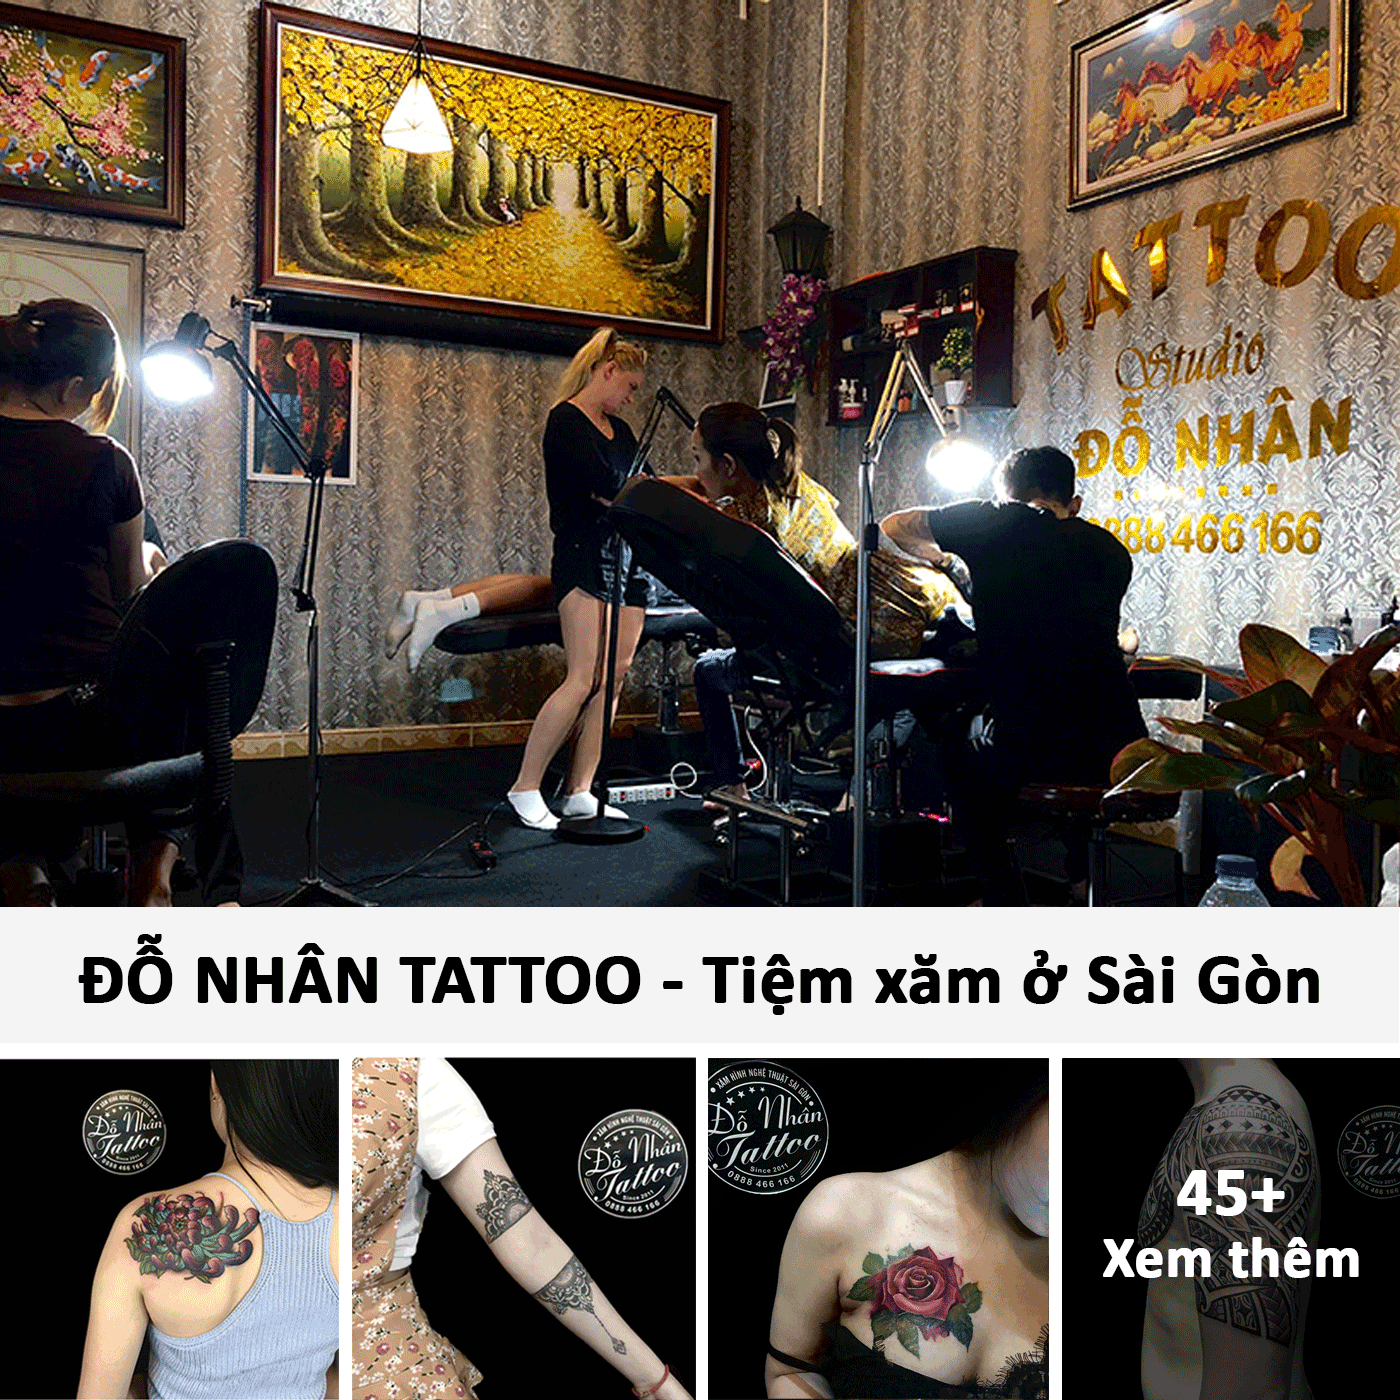 Tadashi Tattoo - Hình xăm hoa Bồ Công Anh Dandelion tattoo by LOC TRAN  TADASHI TATTOO web: tattoovn.com www.tadashitattoo.vn | Facebook